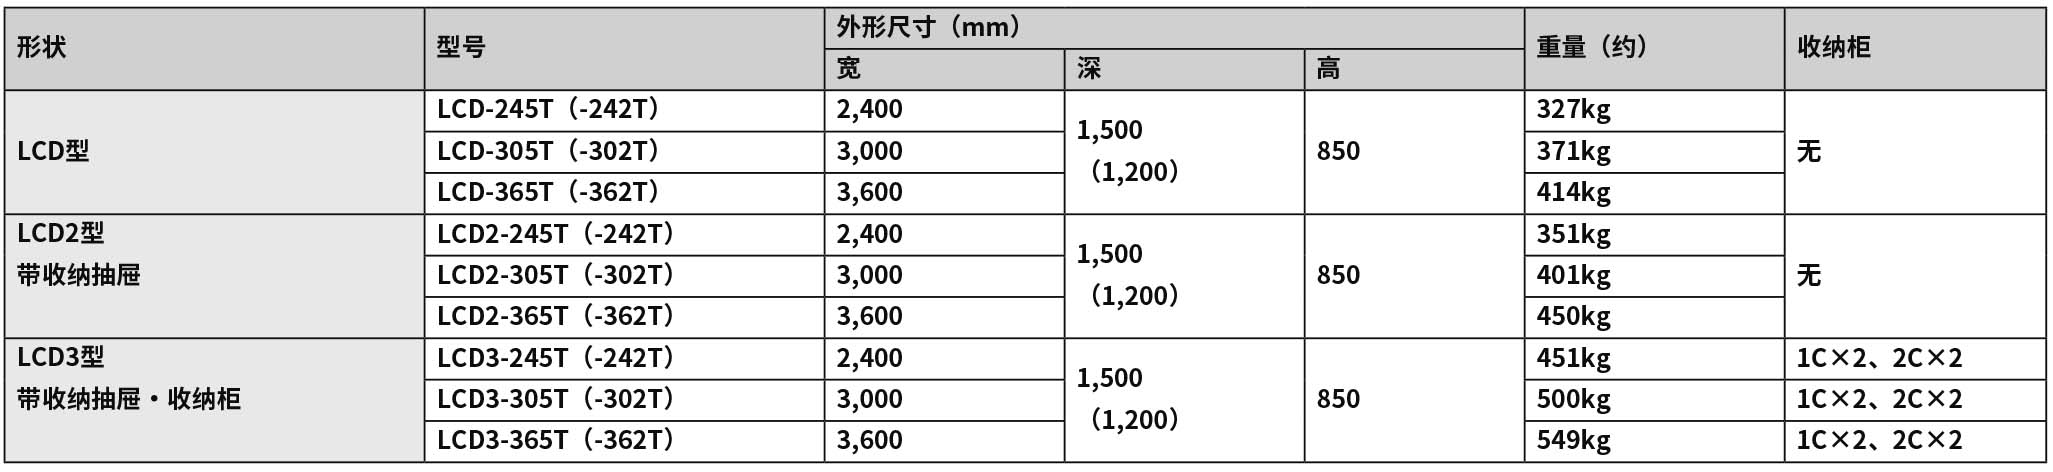 2020-2021_P325 中央台LCD（new）.jpg